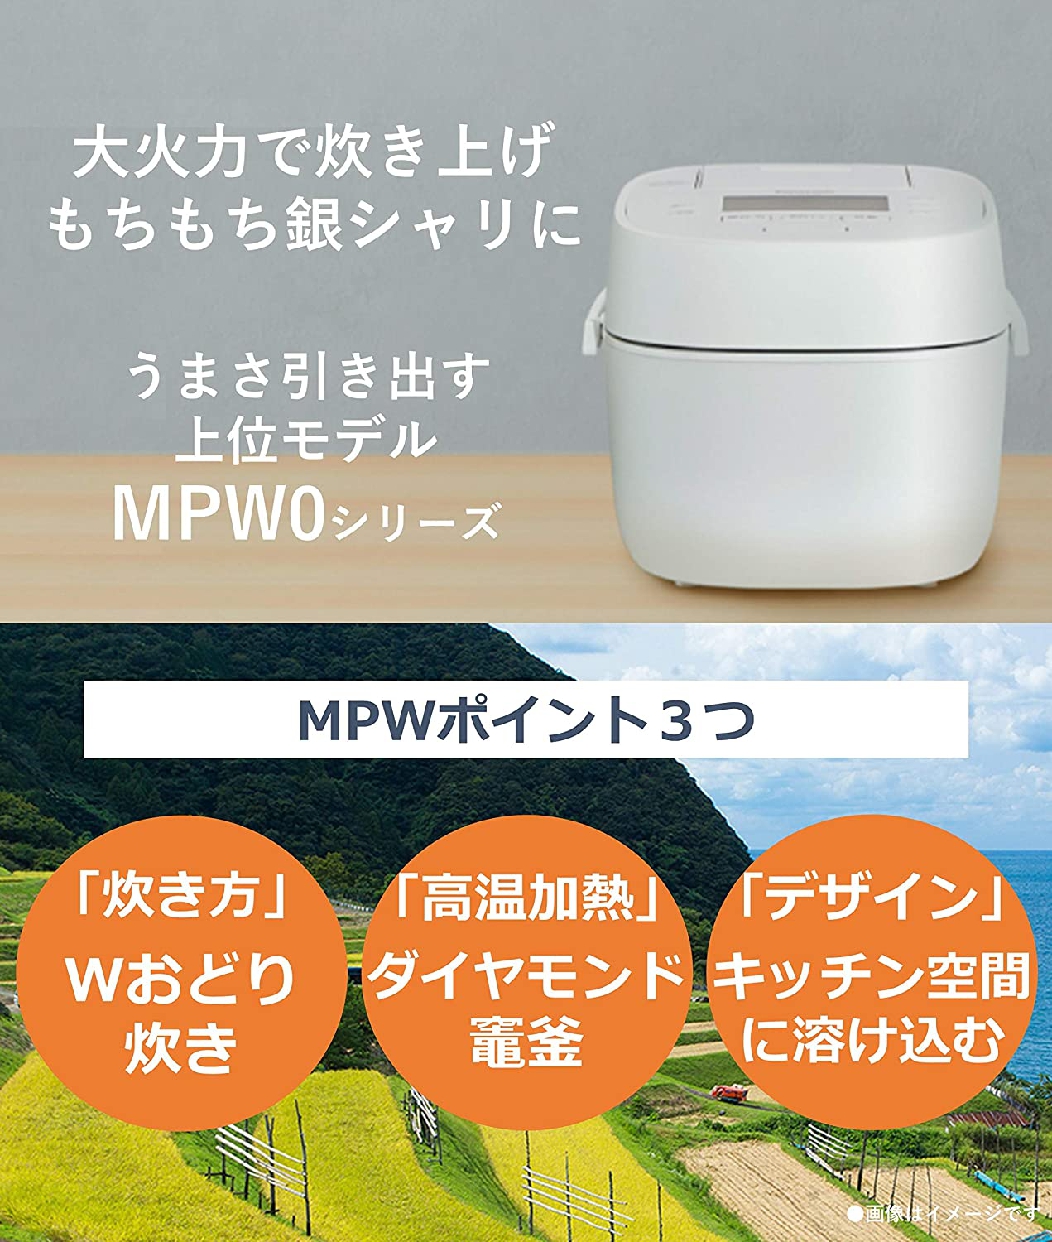 Panasonic(パナソニック) 可変圧力IHジャー炊飯器 SR-MPW100-W ホワイトの商品画像2 